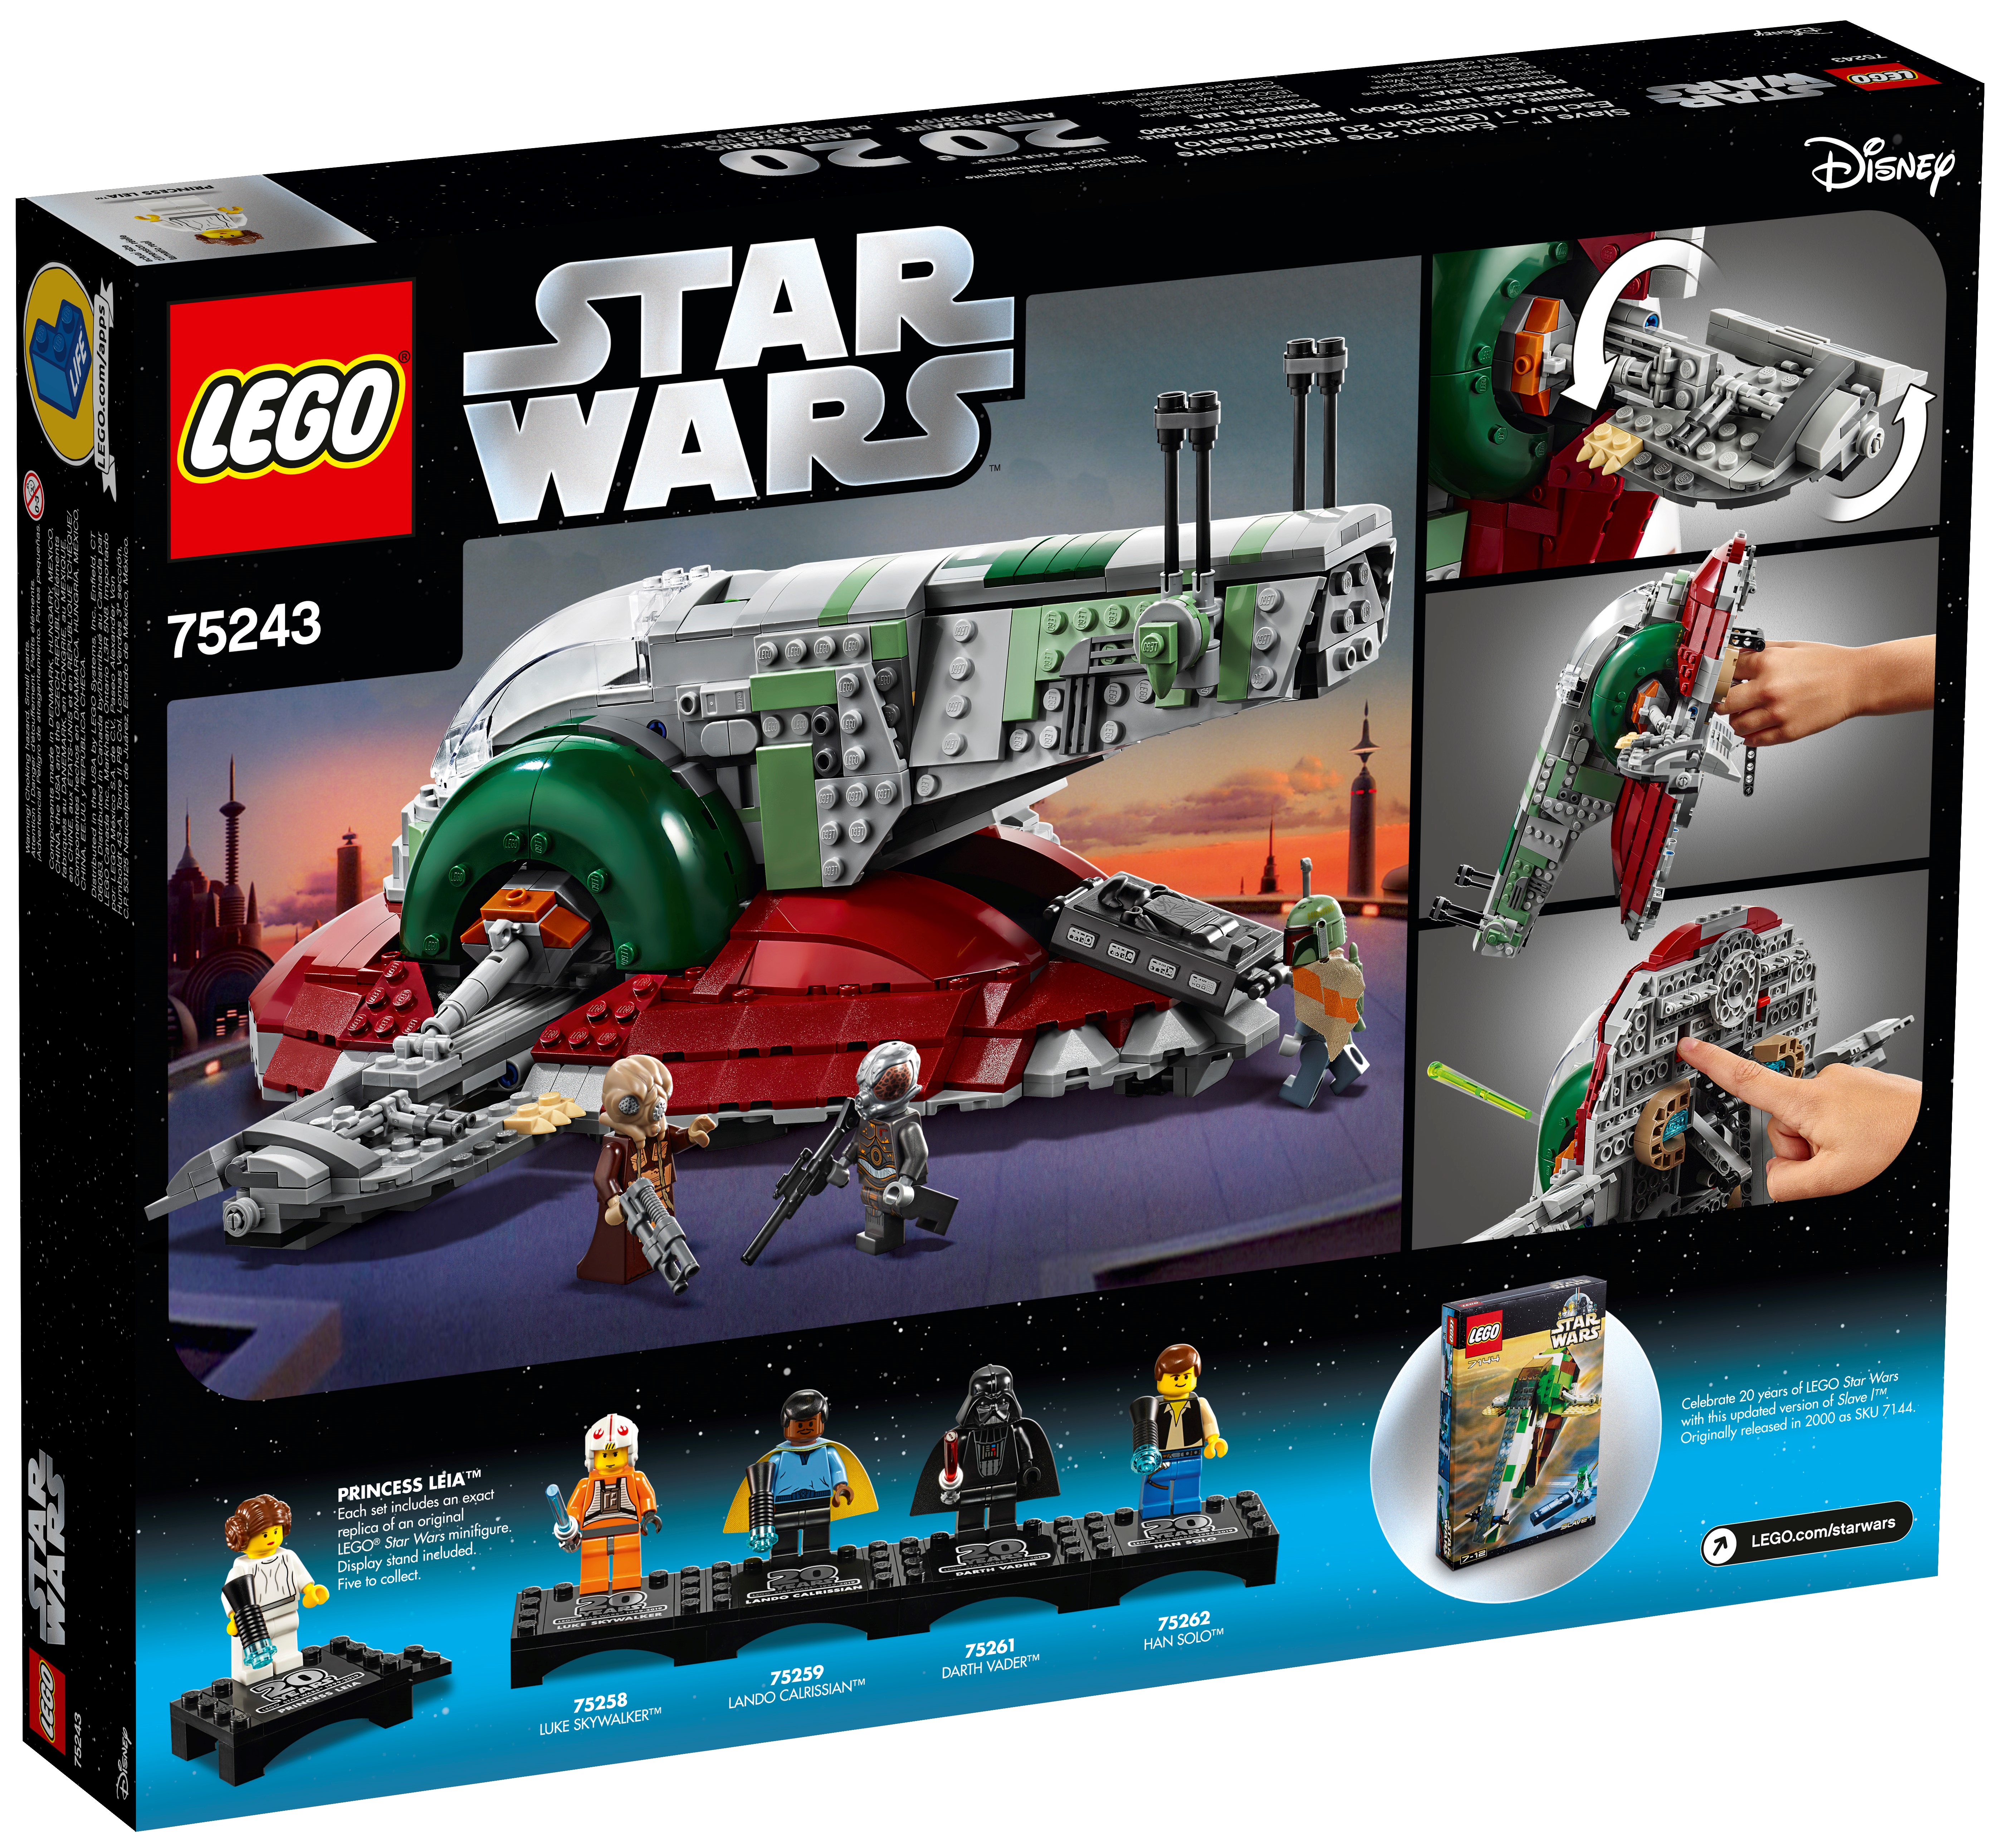 NEW & Sealed 20 Years LEGO Star Wars 20 Jahre LEGO Star Wars 